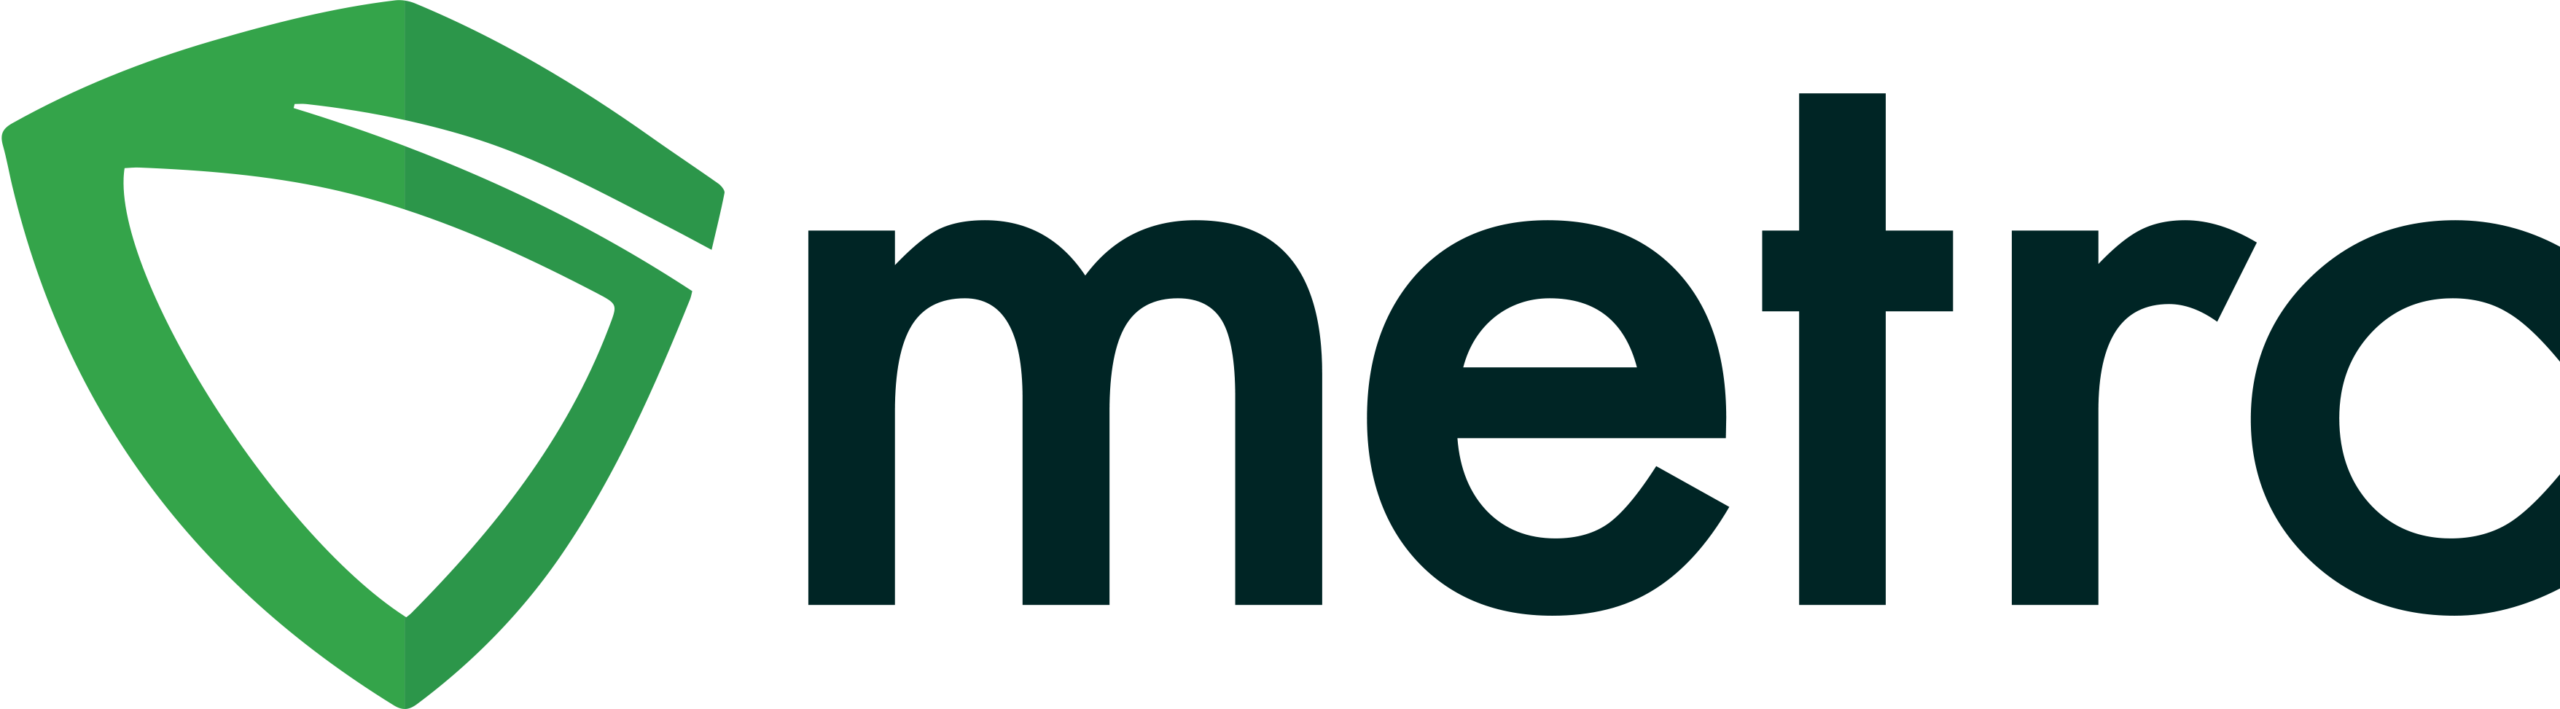 Cannabis tracking tech company Metrc's logo